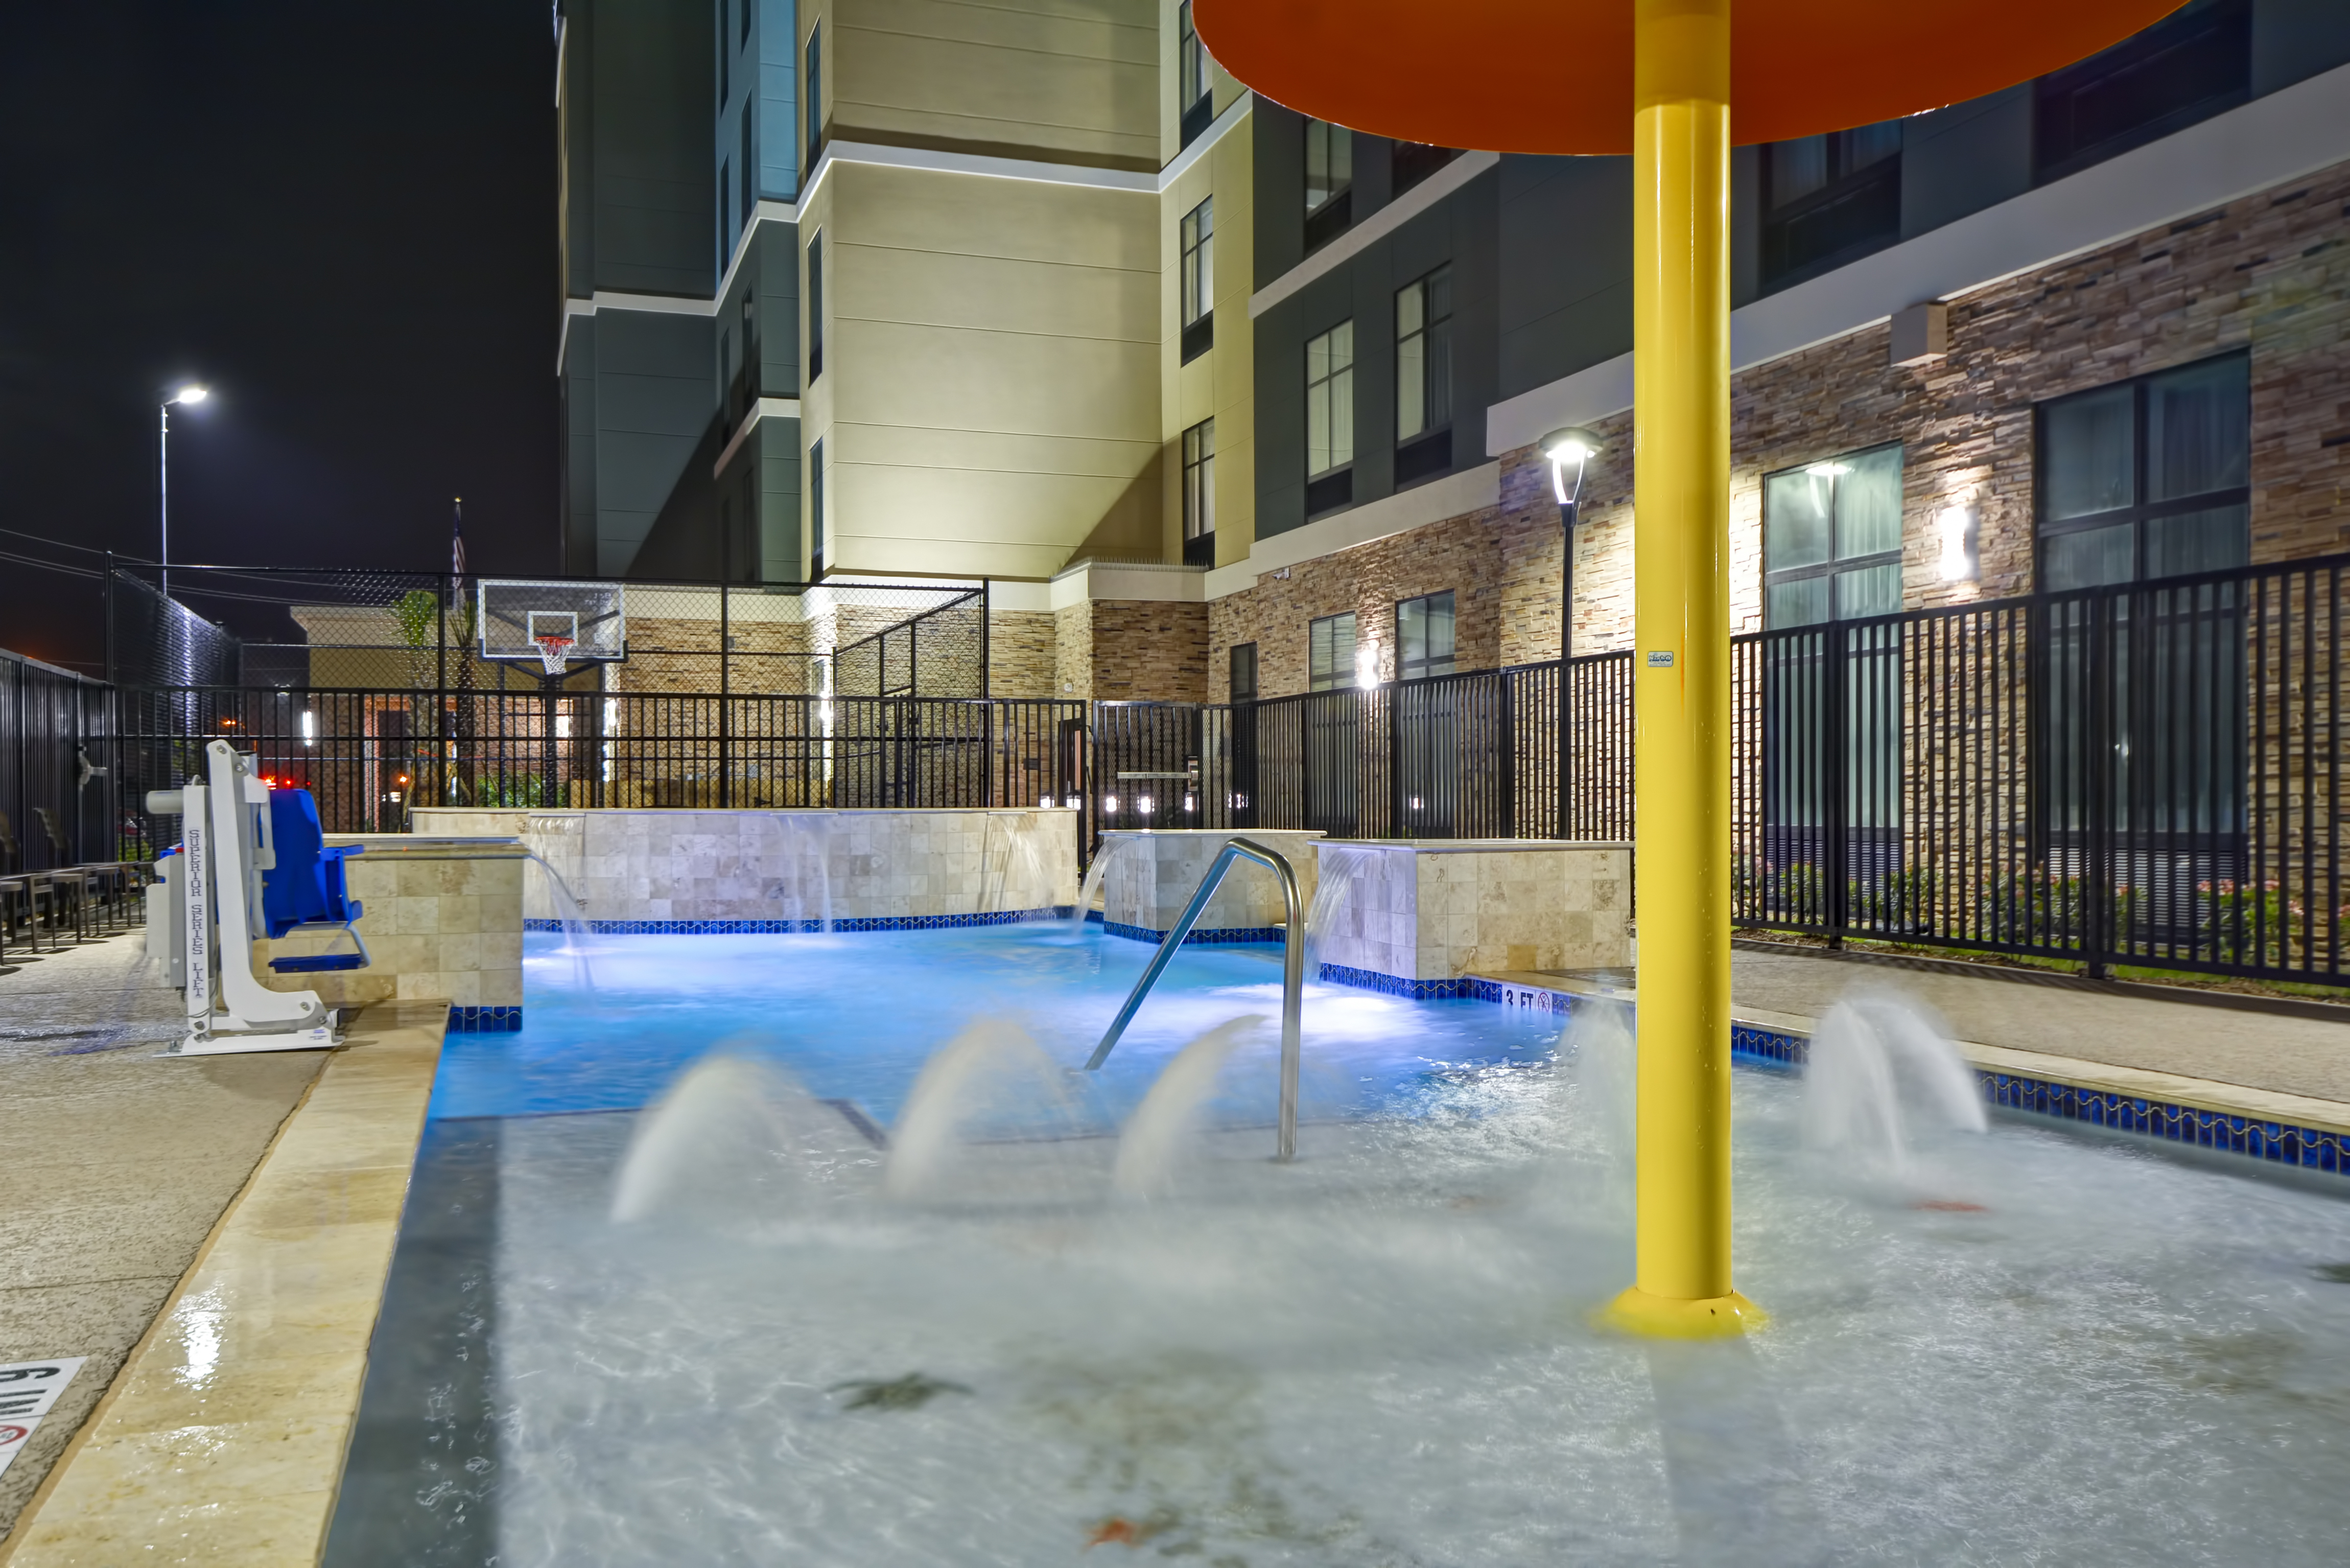 Outdoor Pool Kids Splash Area at Night